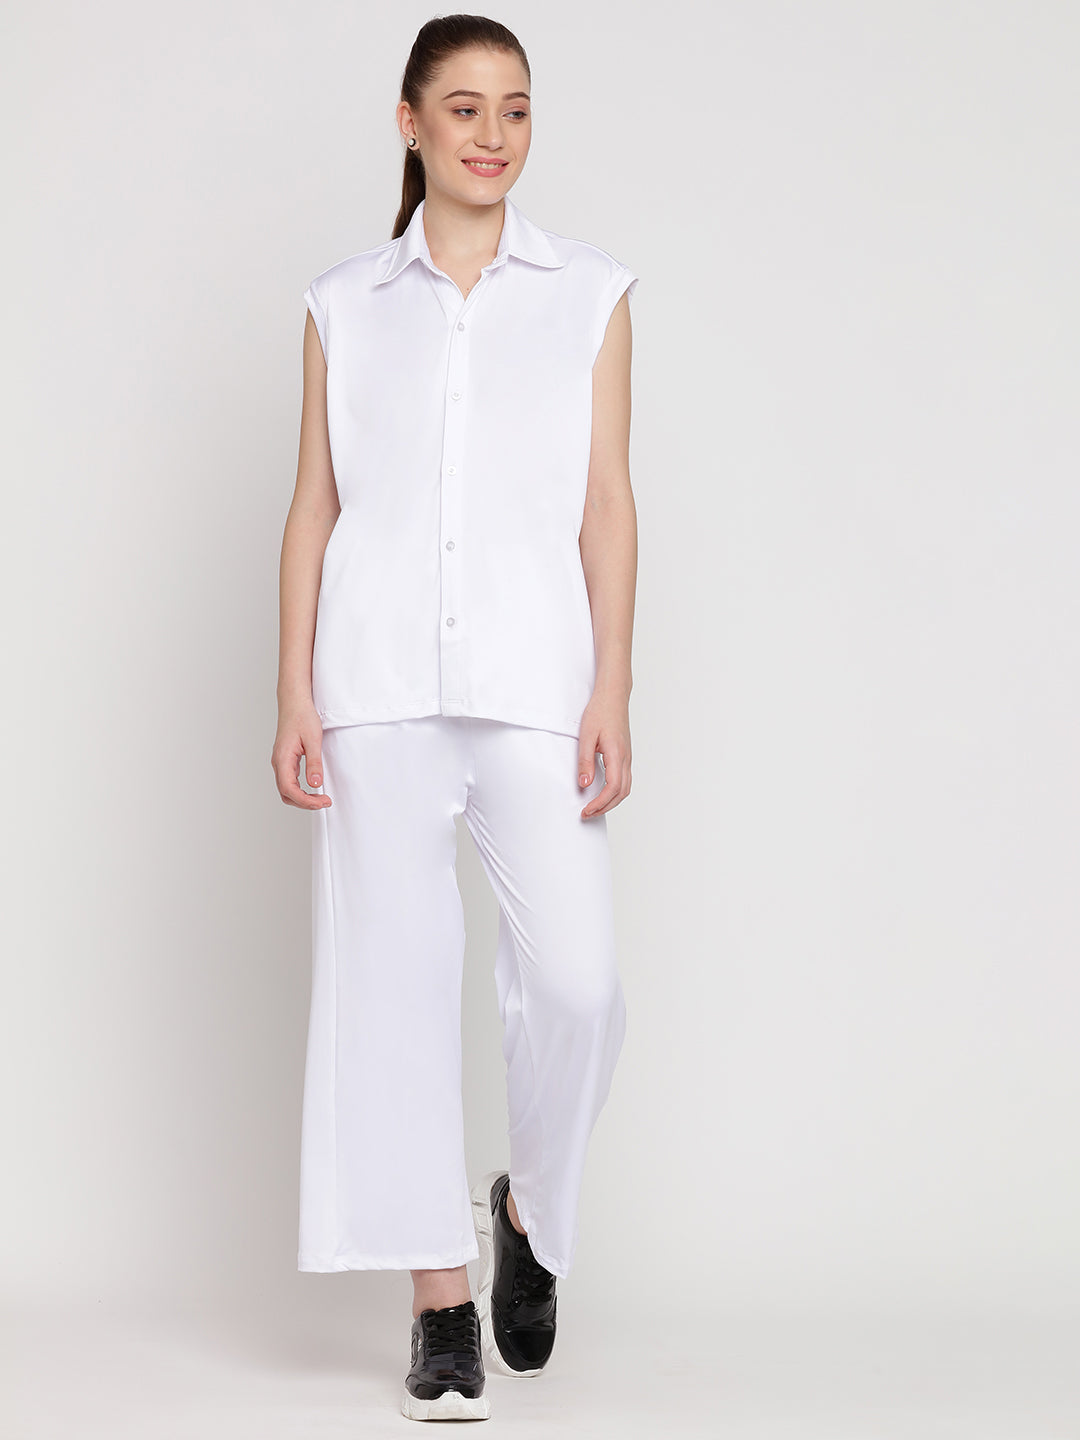 Zen Flow Shirt - White